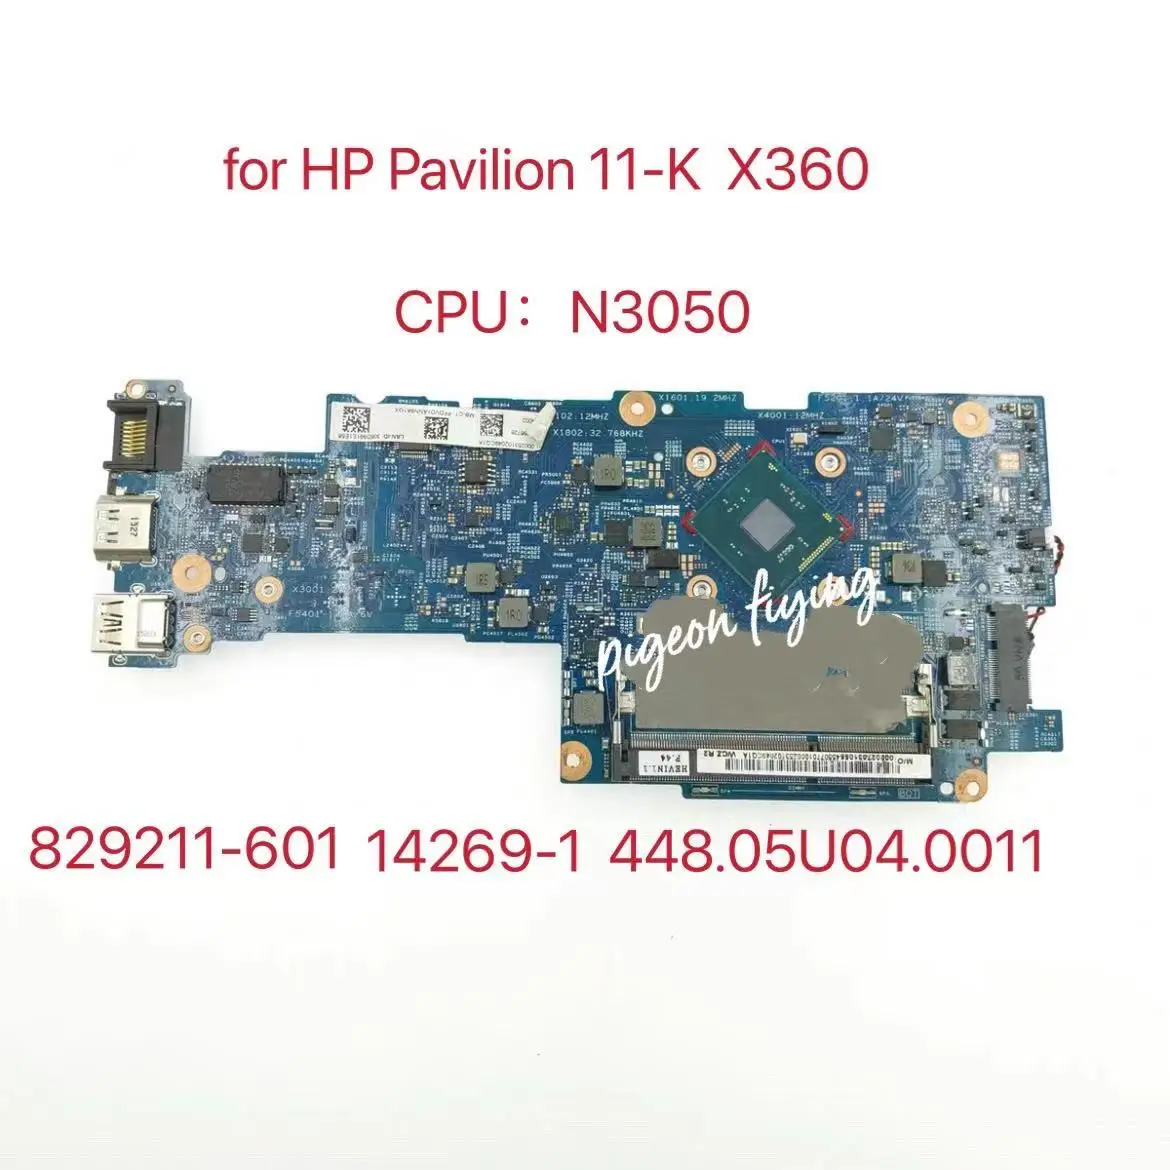 для HP Pavilion 11-K X360 Материнская плата ноутбука Процессор: N3050 829211-601 829211-501 829211-001 14269-1 448.05U04.0011 Тест В порядке